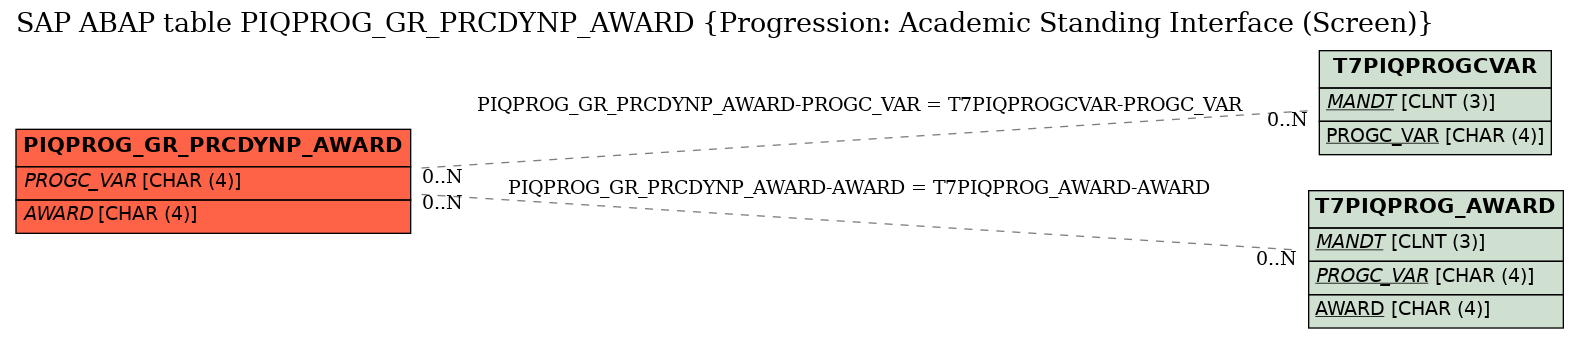 E-R Diagram for table PIQPROG_GR_PRCDYNP_AWARD (Progression: Academic Standing Interface (Screen))